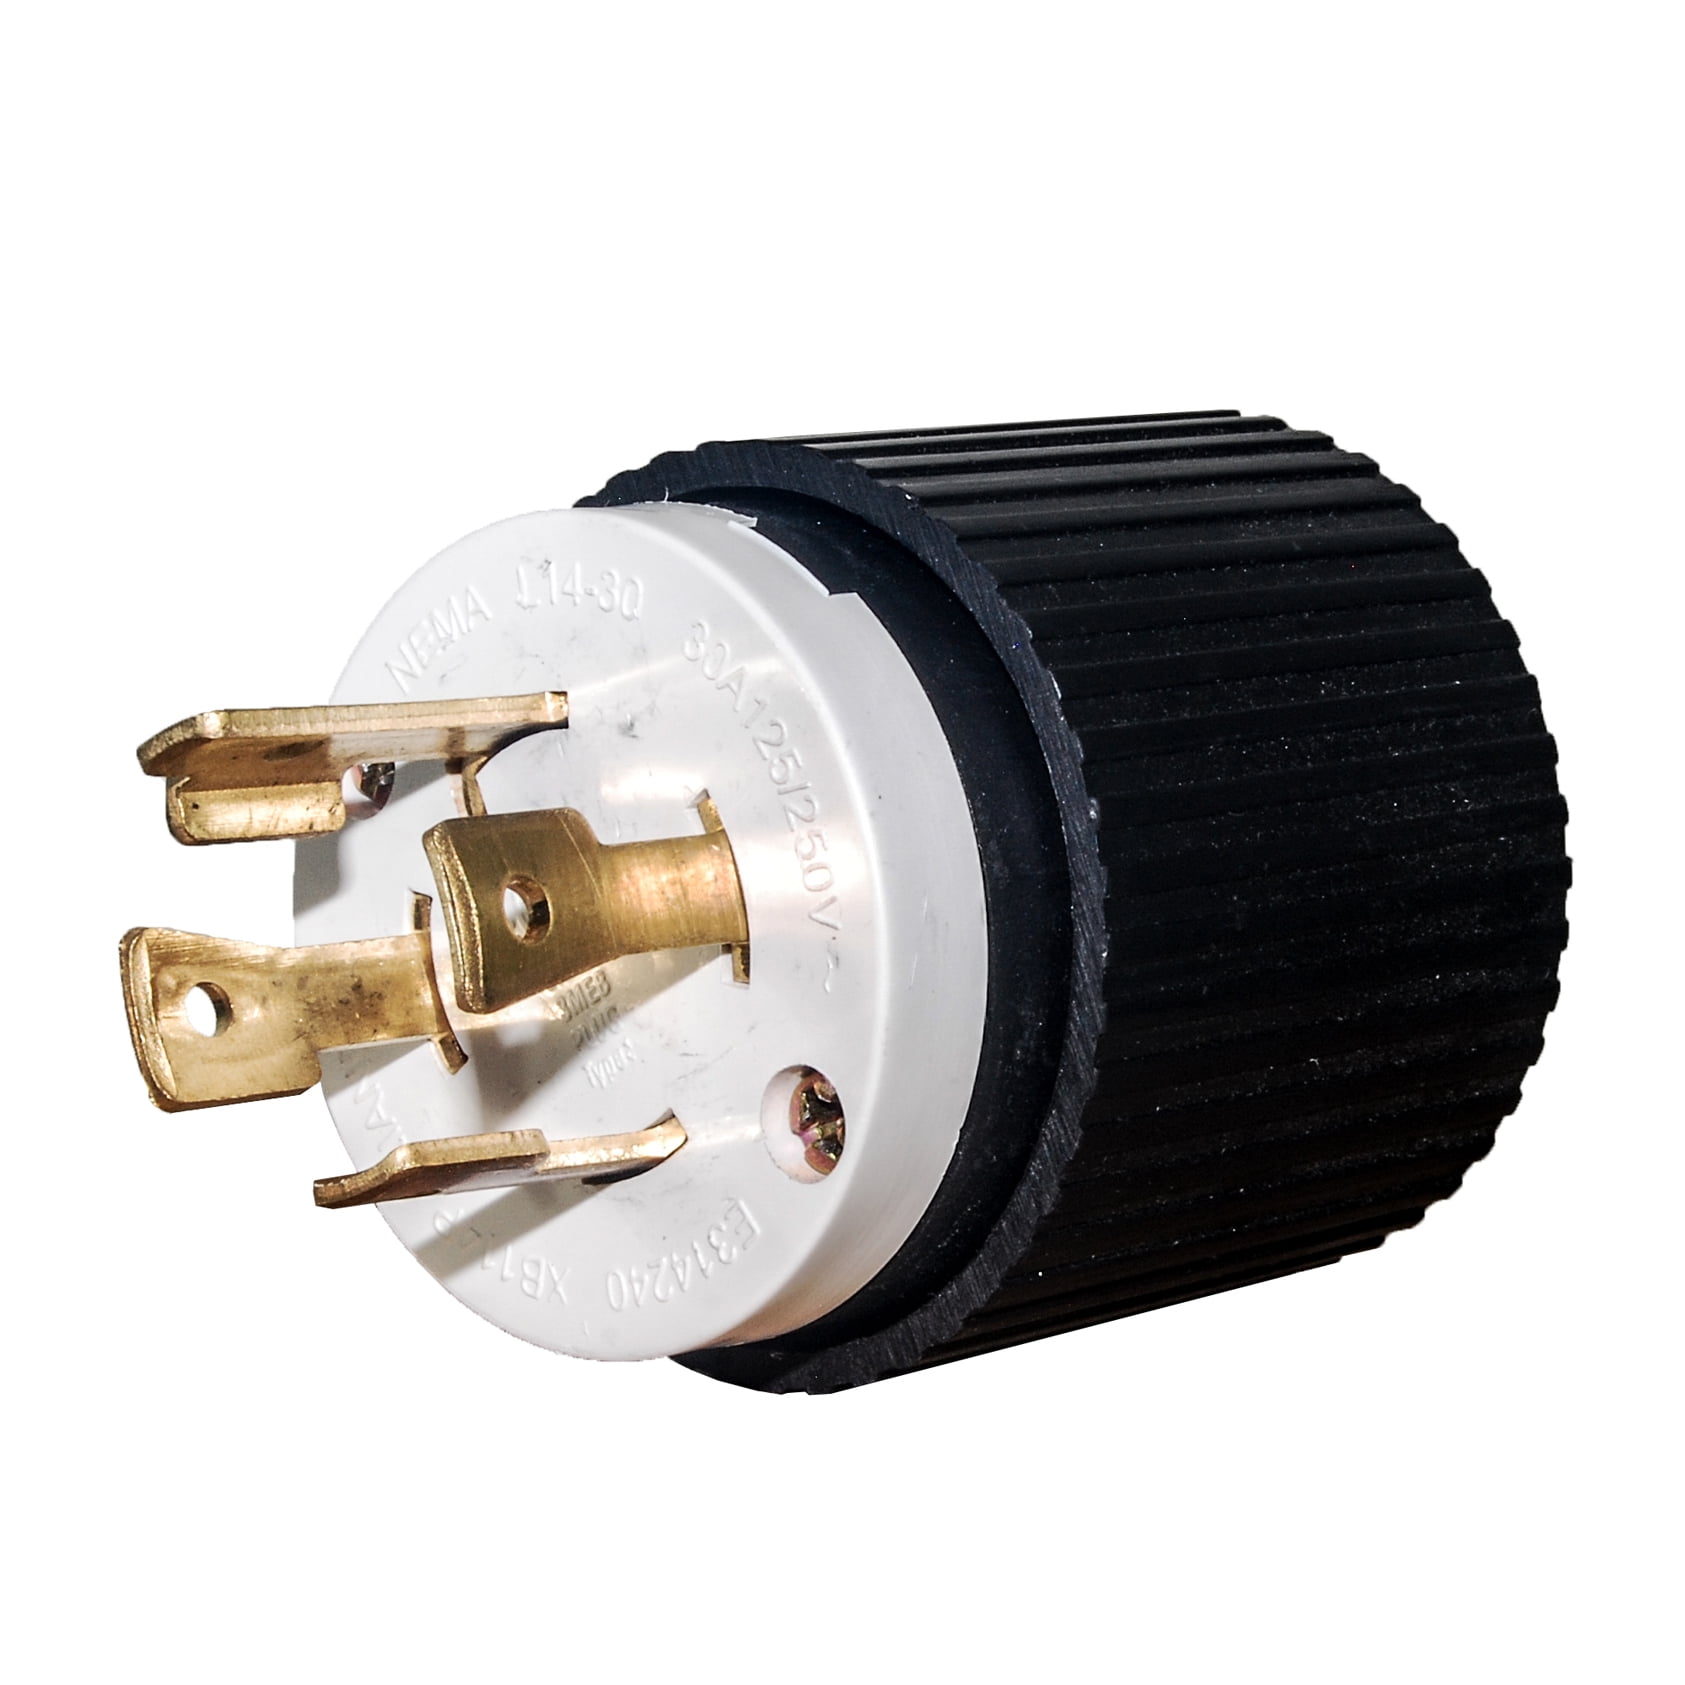 Plug L14 30 30A 125/250V 30P OZ-USA? Locking Generator Cable